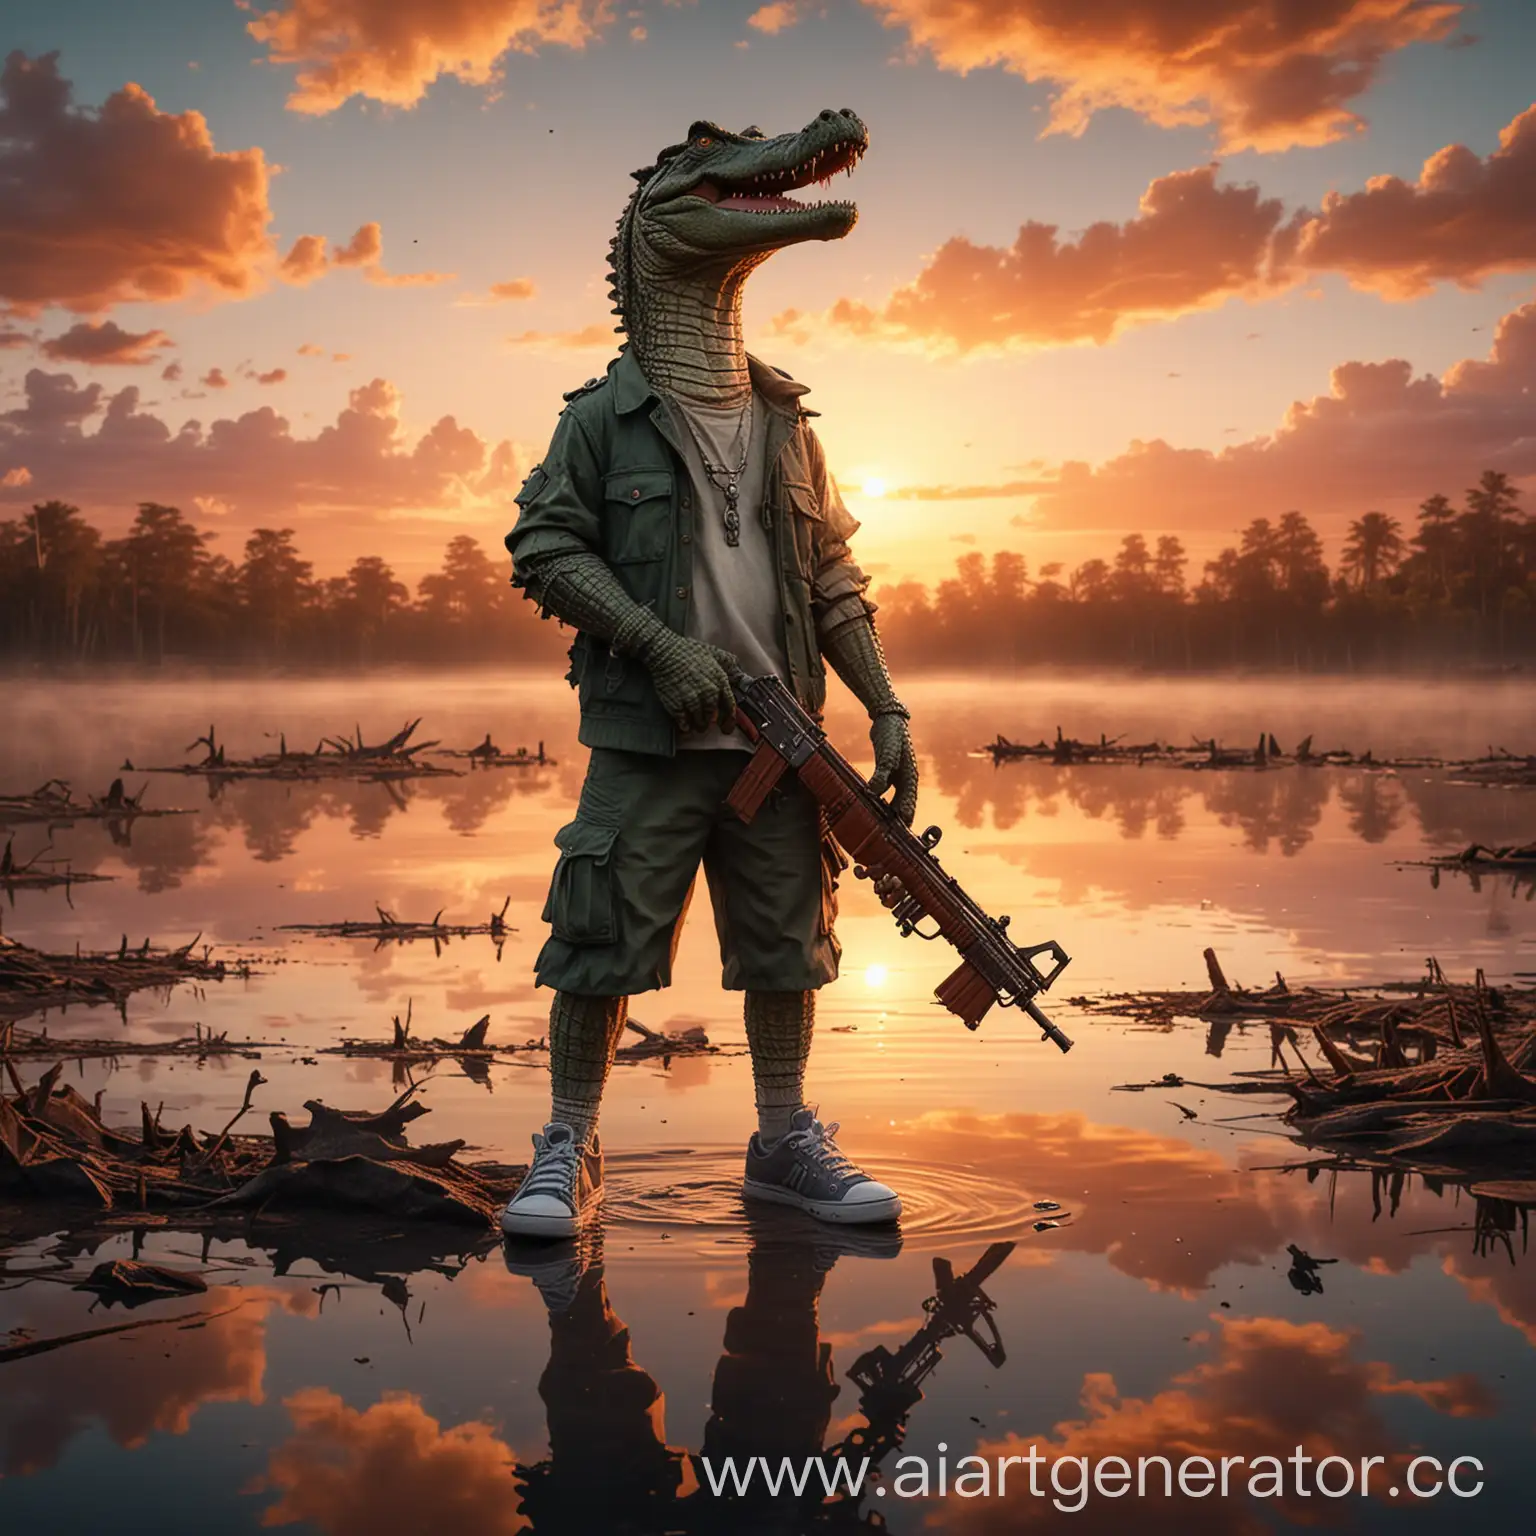 Crocodile-Wearing-Sneakers-with-Gun-at-Sunset-Lake